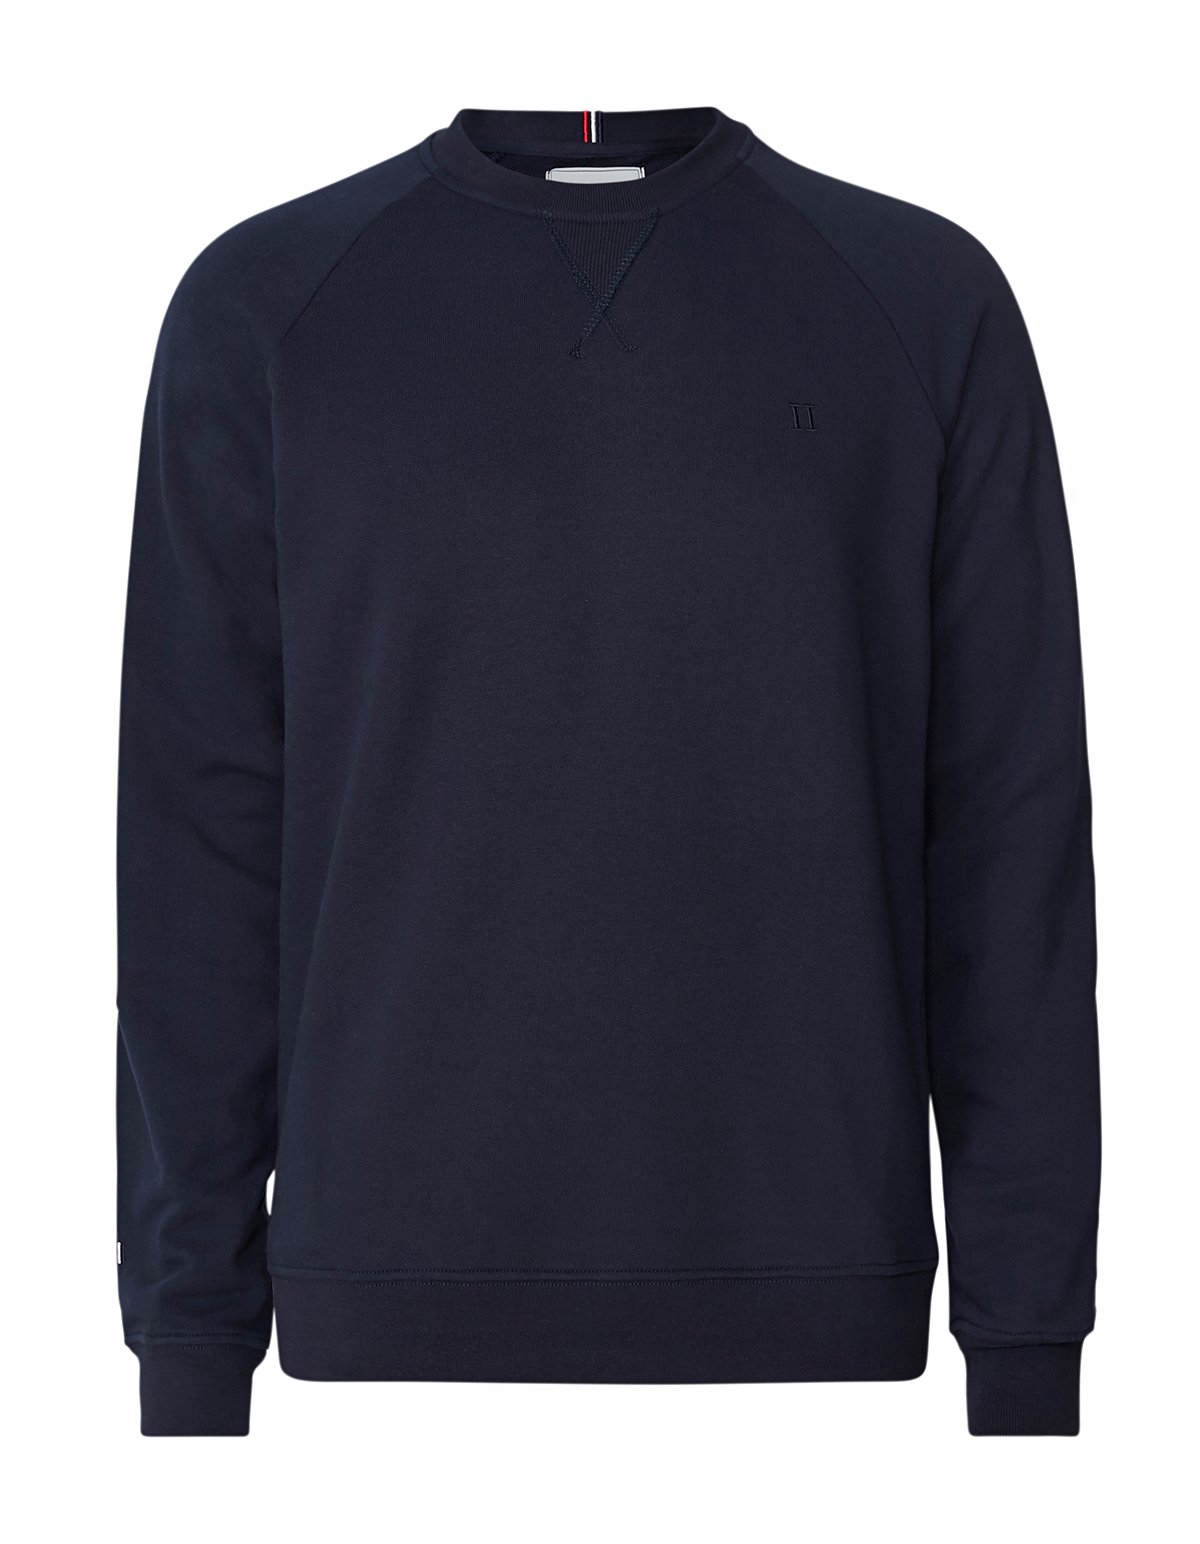 Buy Les Deux Calais Sweatshirt Dark Navy - Scandinavian Fashion Store